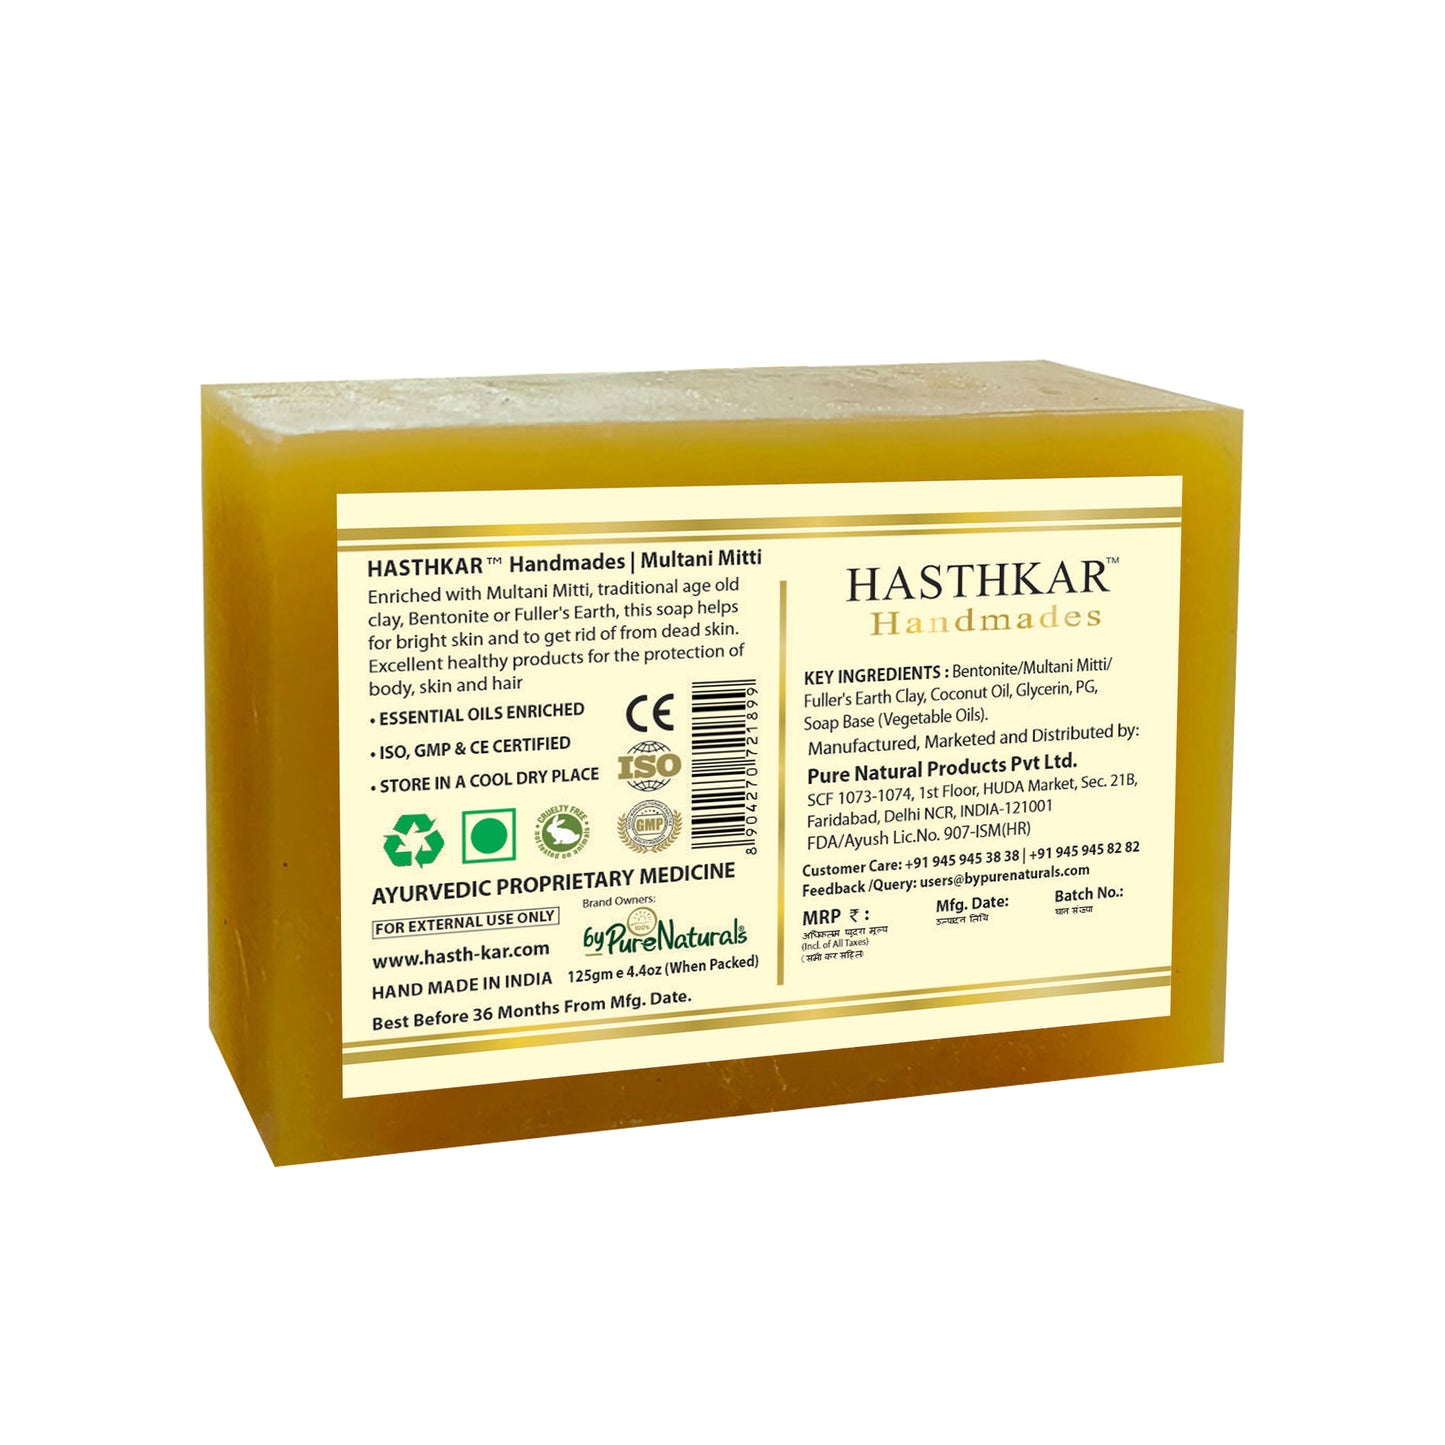 Hasthkar Handmades Glycerine Multani Mitti Soap 125gm Pack of 6